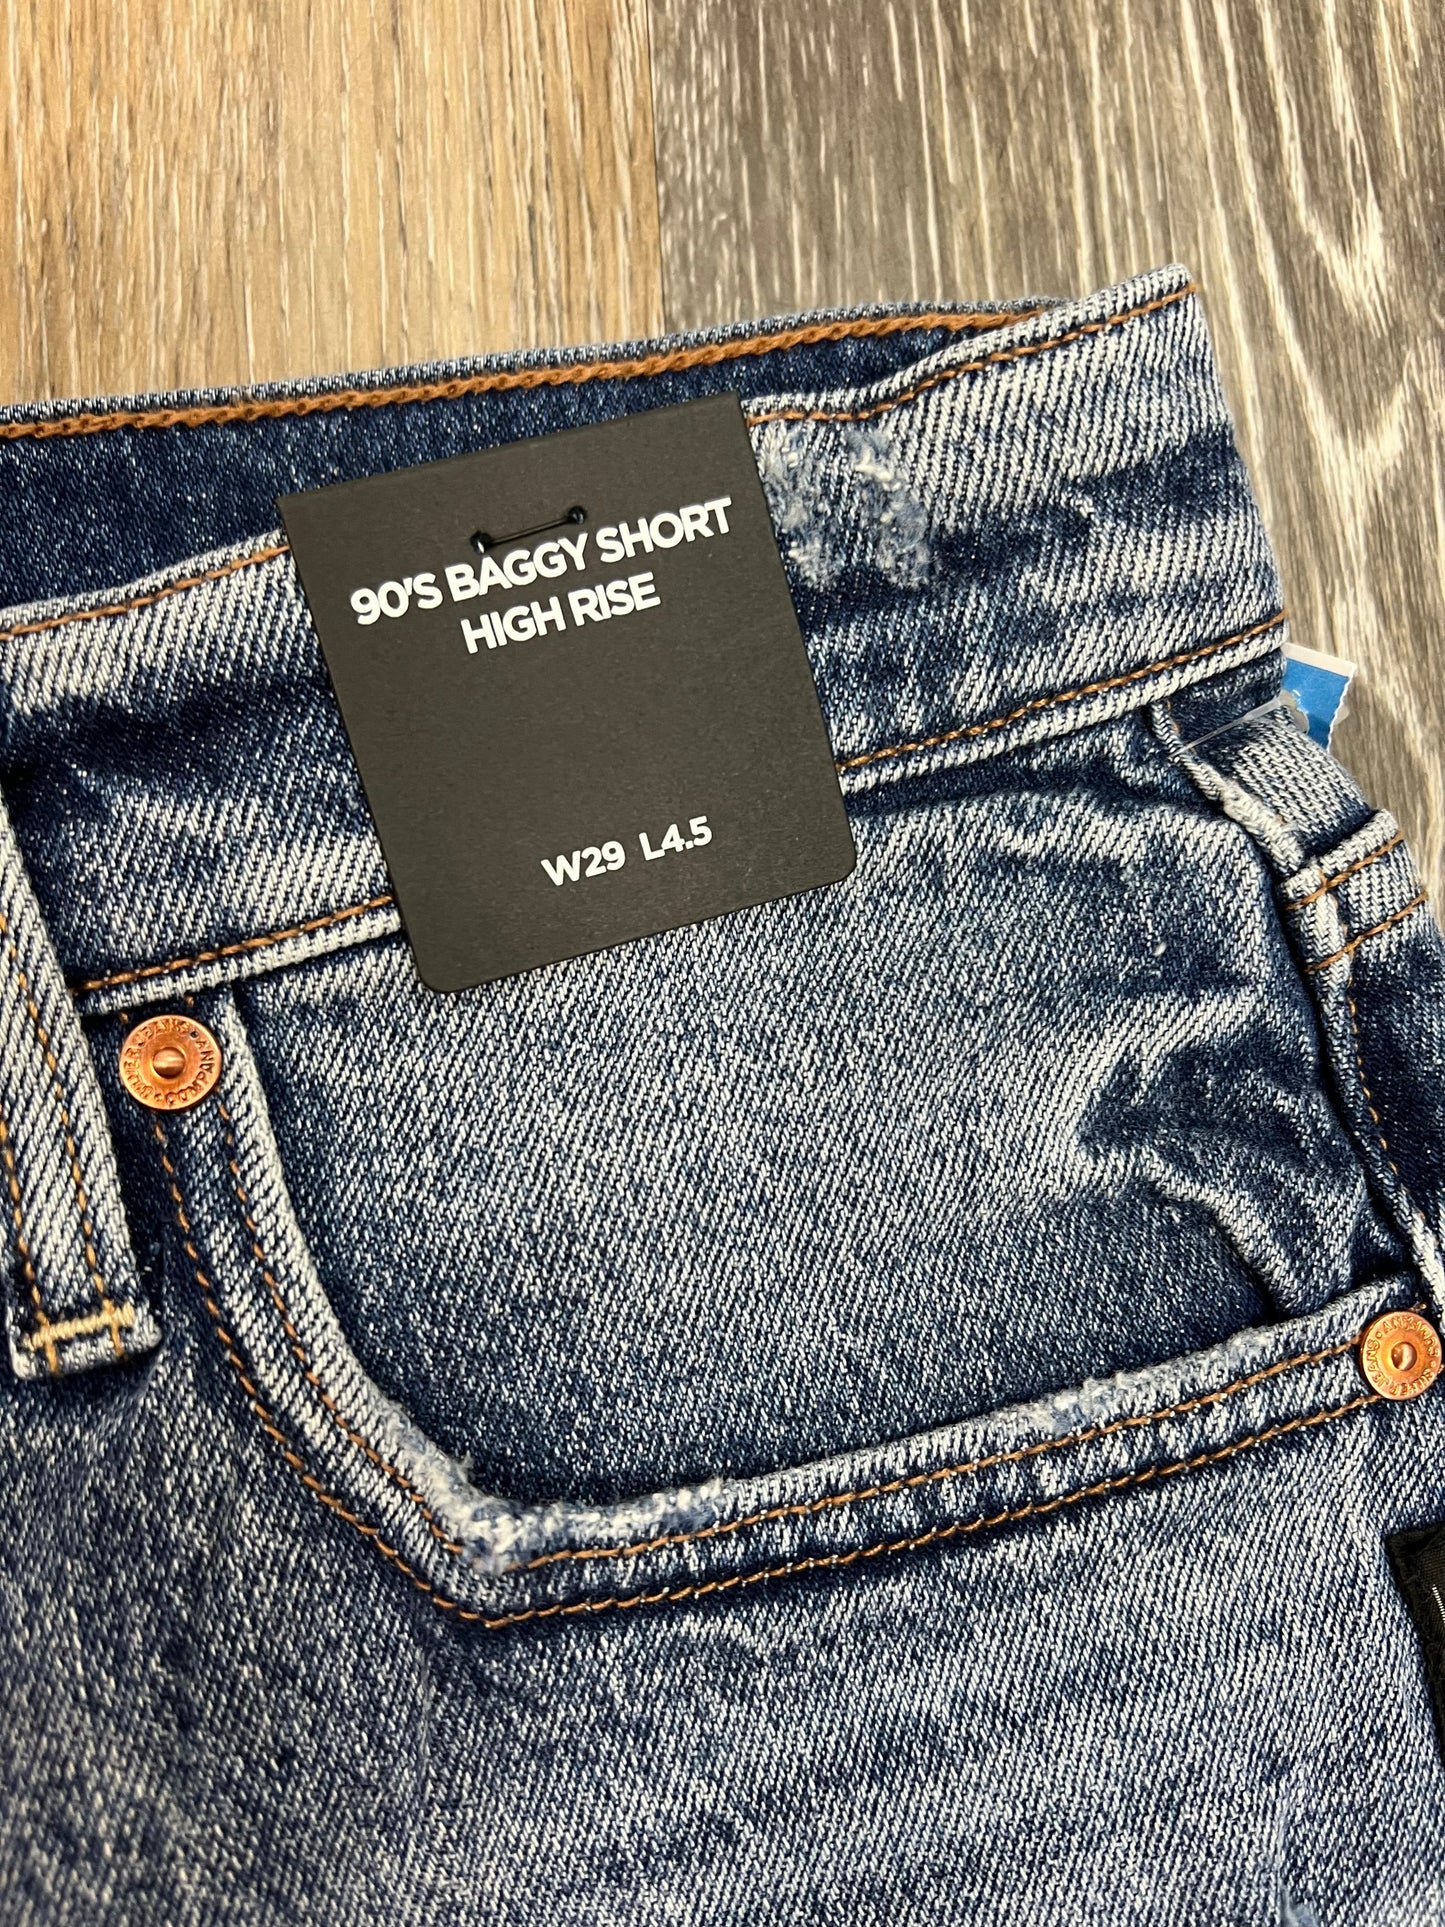 Blue Denim Shorts Silver, Size 8/29